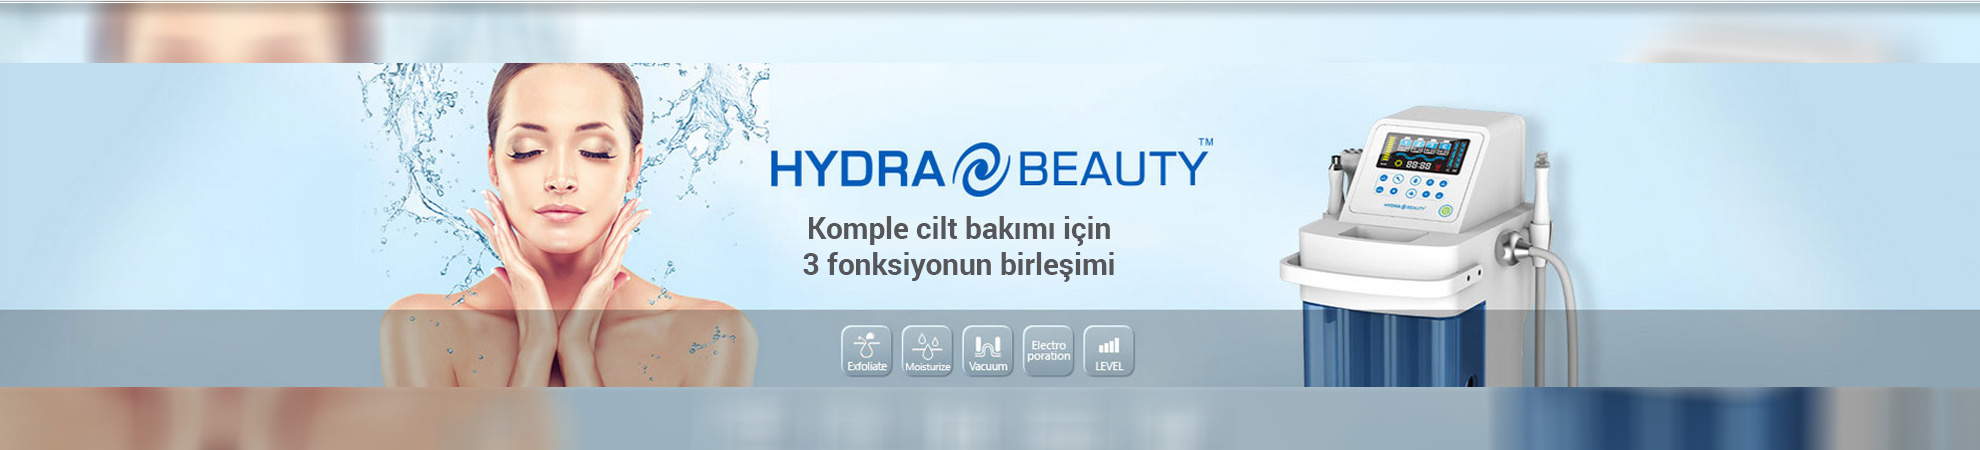 hydra-beauty-banner